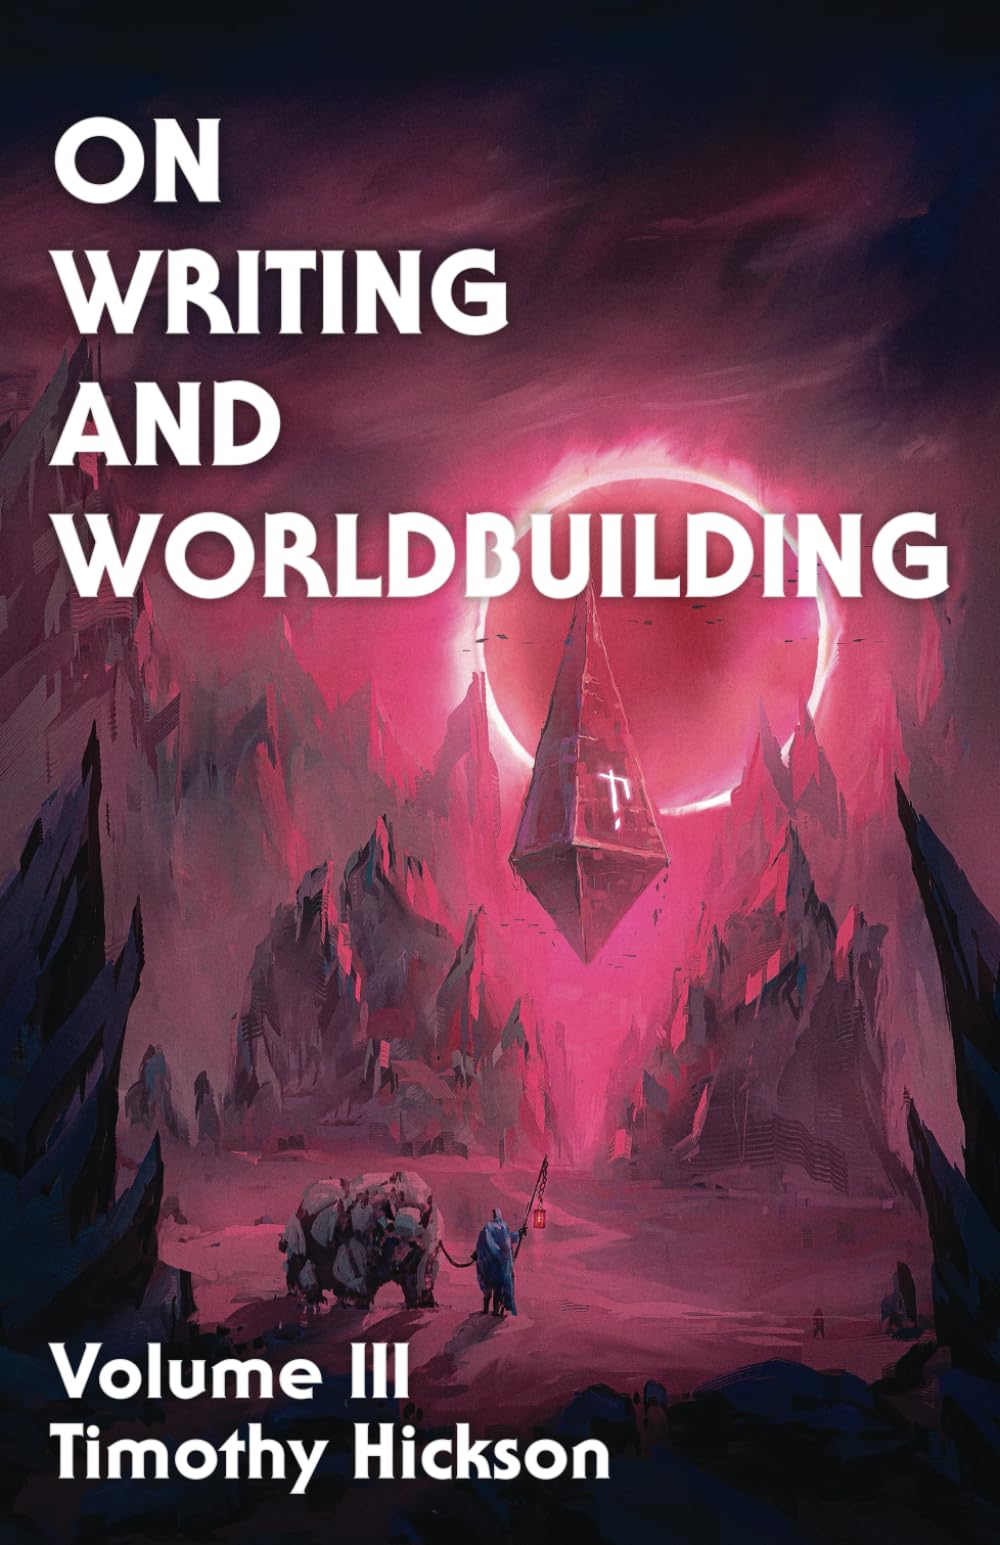 On Writing and Worldbuilding: Volume III